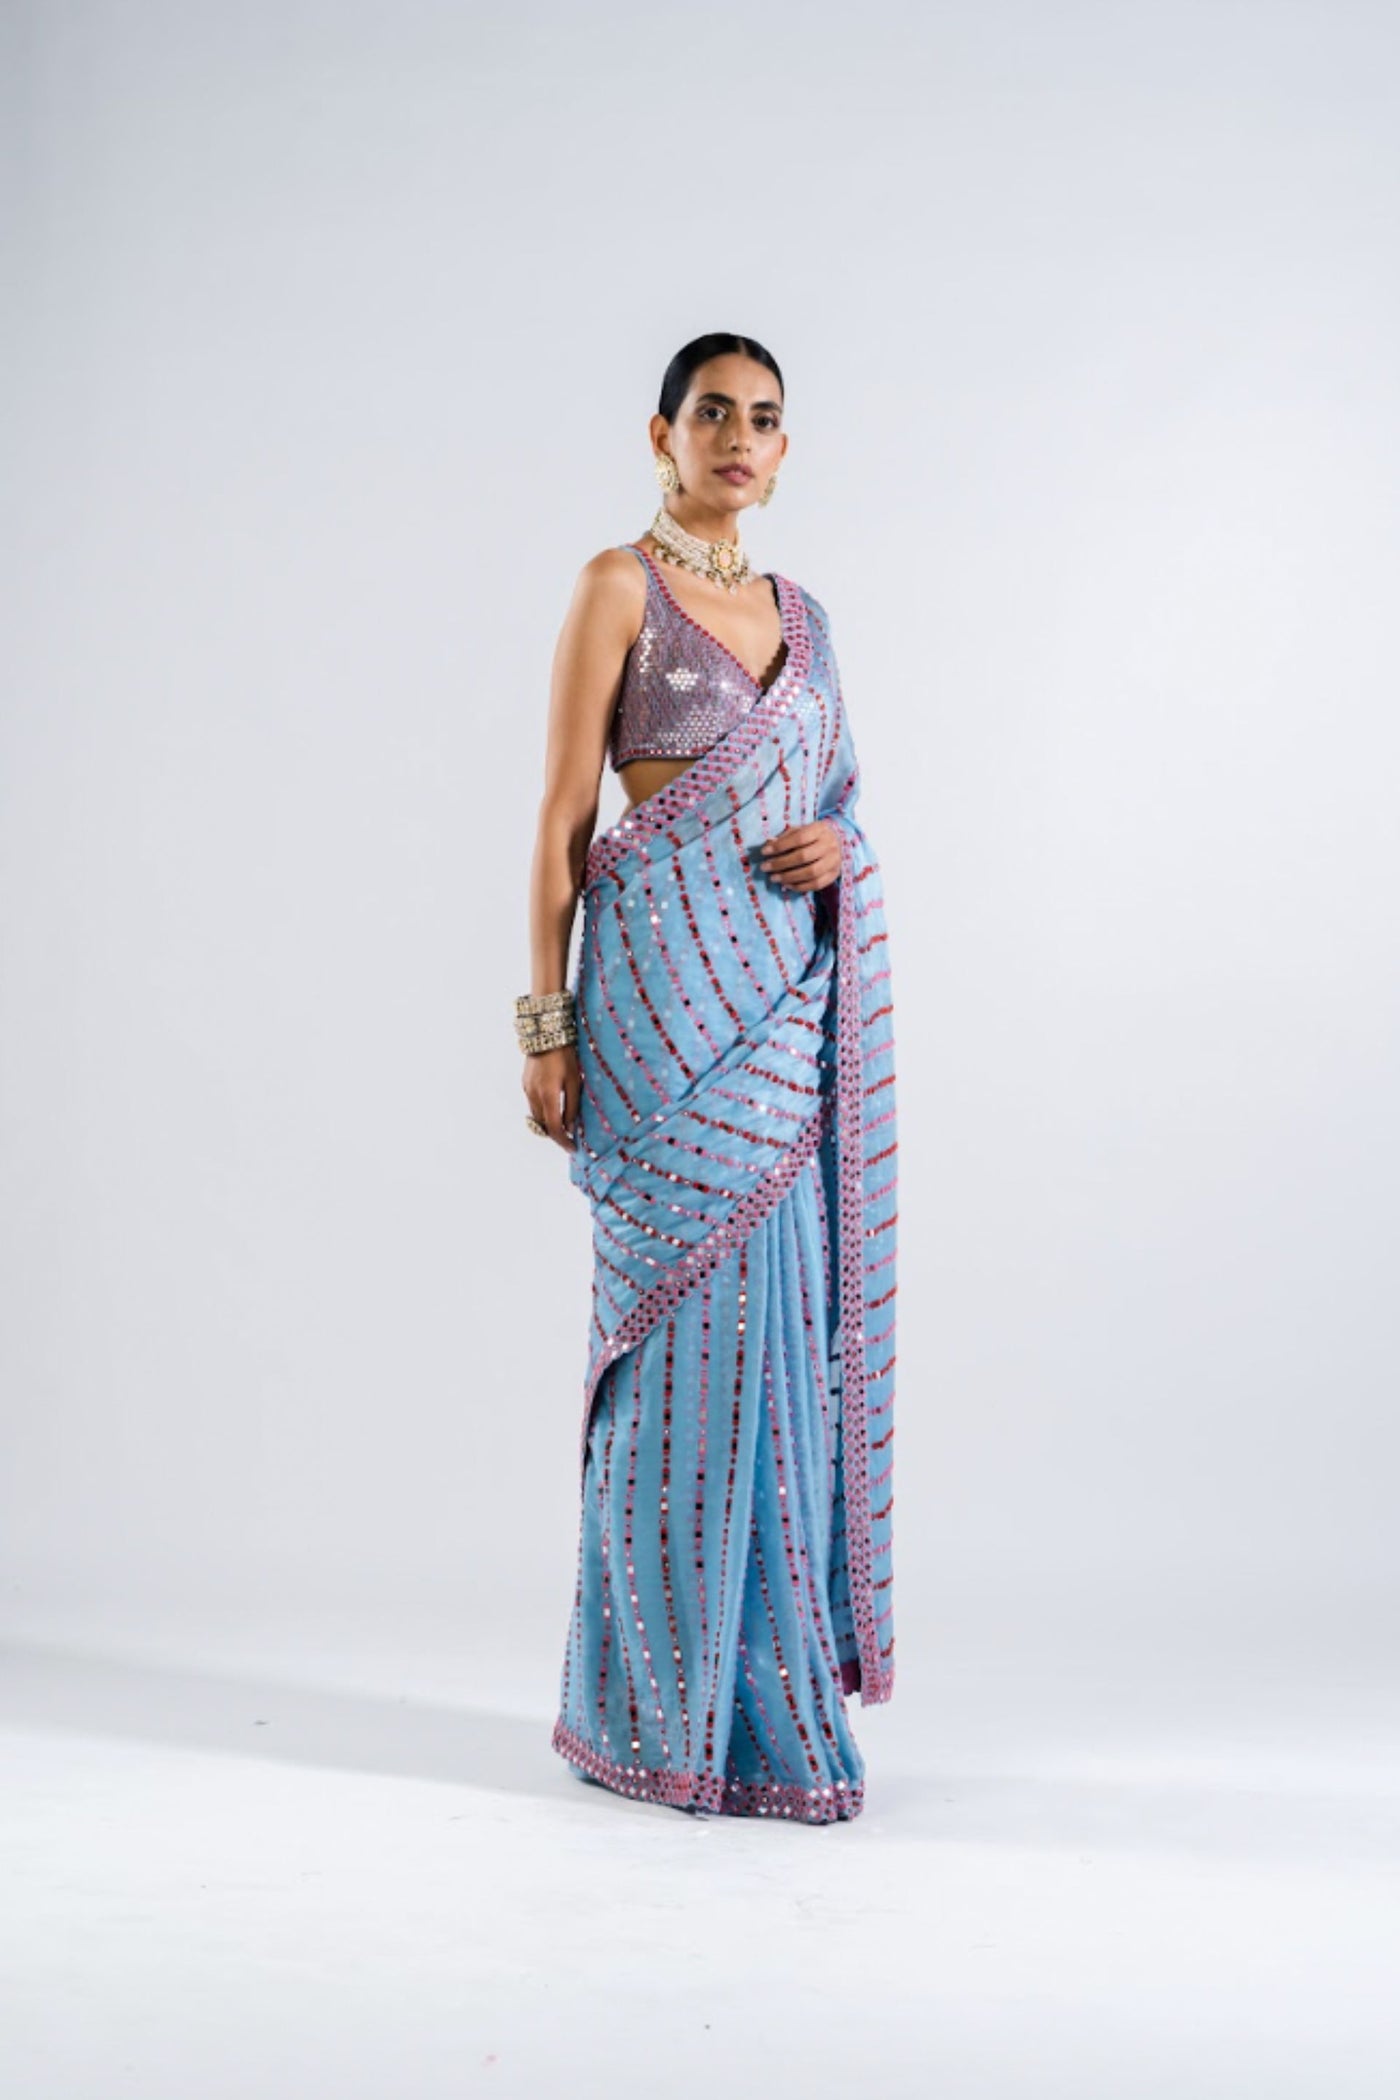 V Vani Vats Ice Blue Heavy Mirror Work Saree With Metallic Blouse Indian designer wear online shopping melange singapore